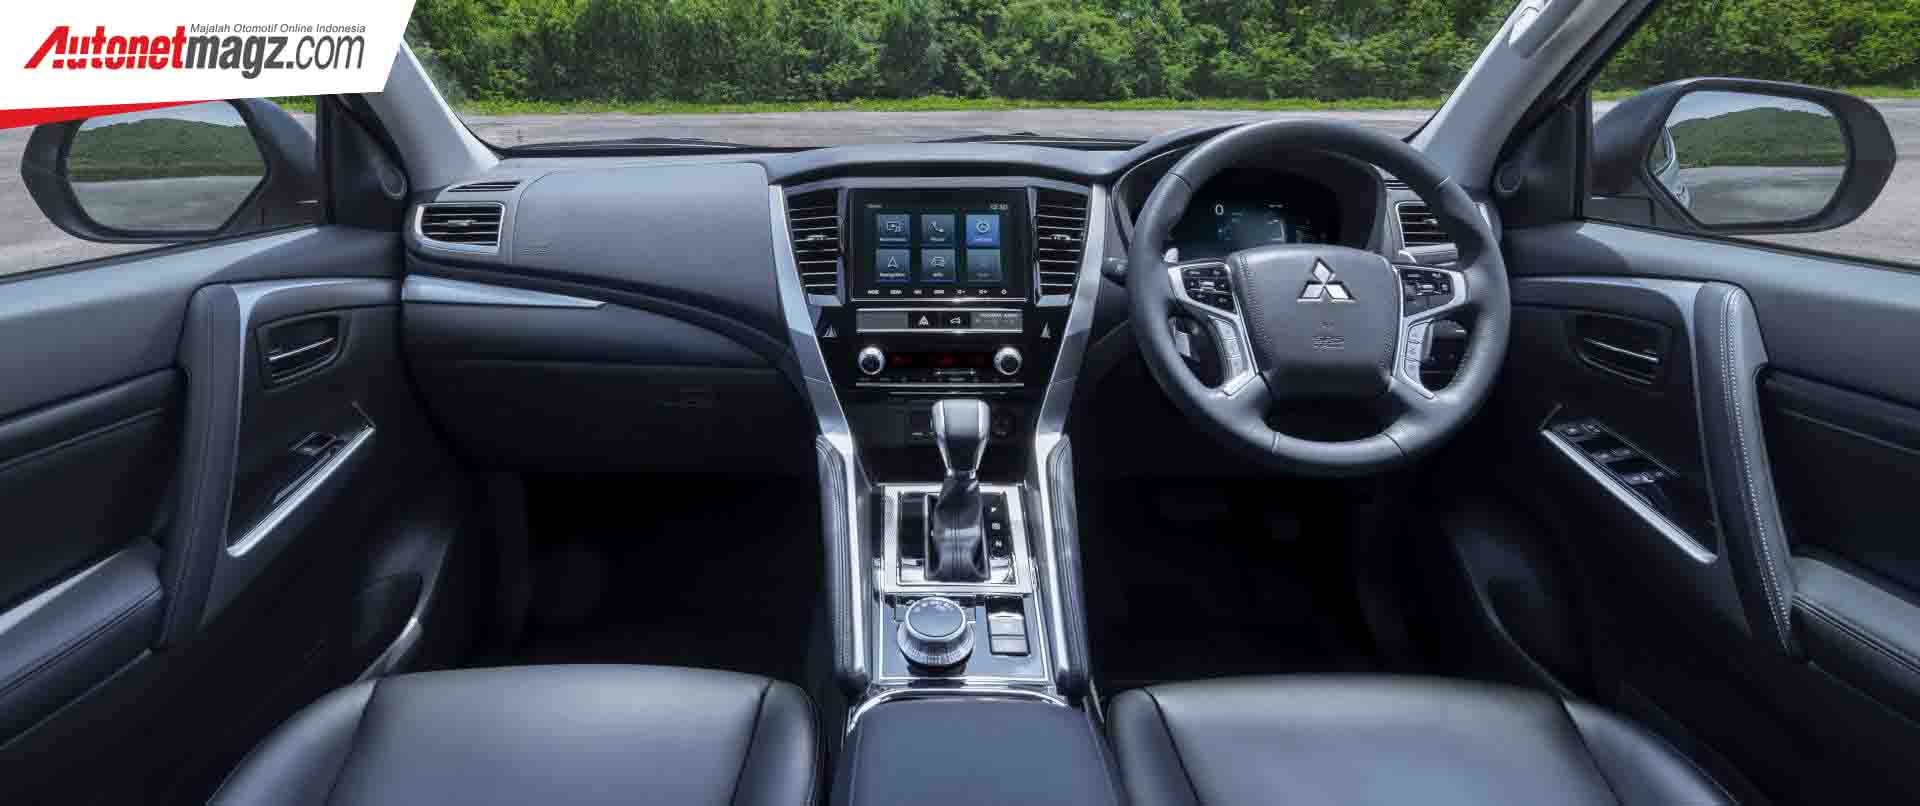 Berita, Interior Mitsubishi Pajero Sport Facelift: Mitsubishi Pajero Sport Facelift 2019 : Muka Baru, Fitur Baru!